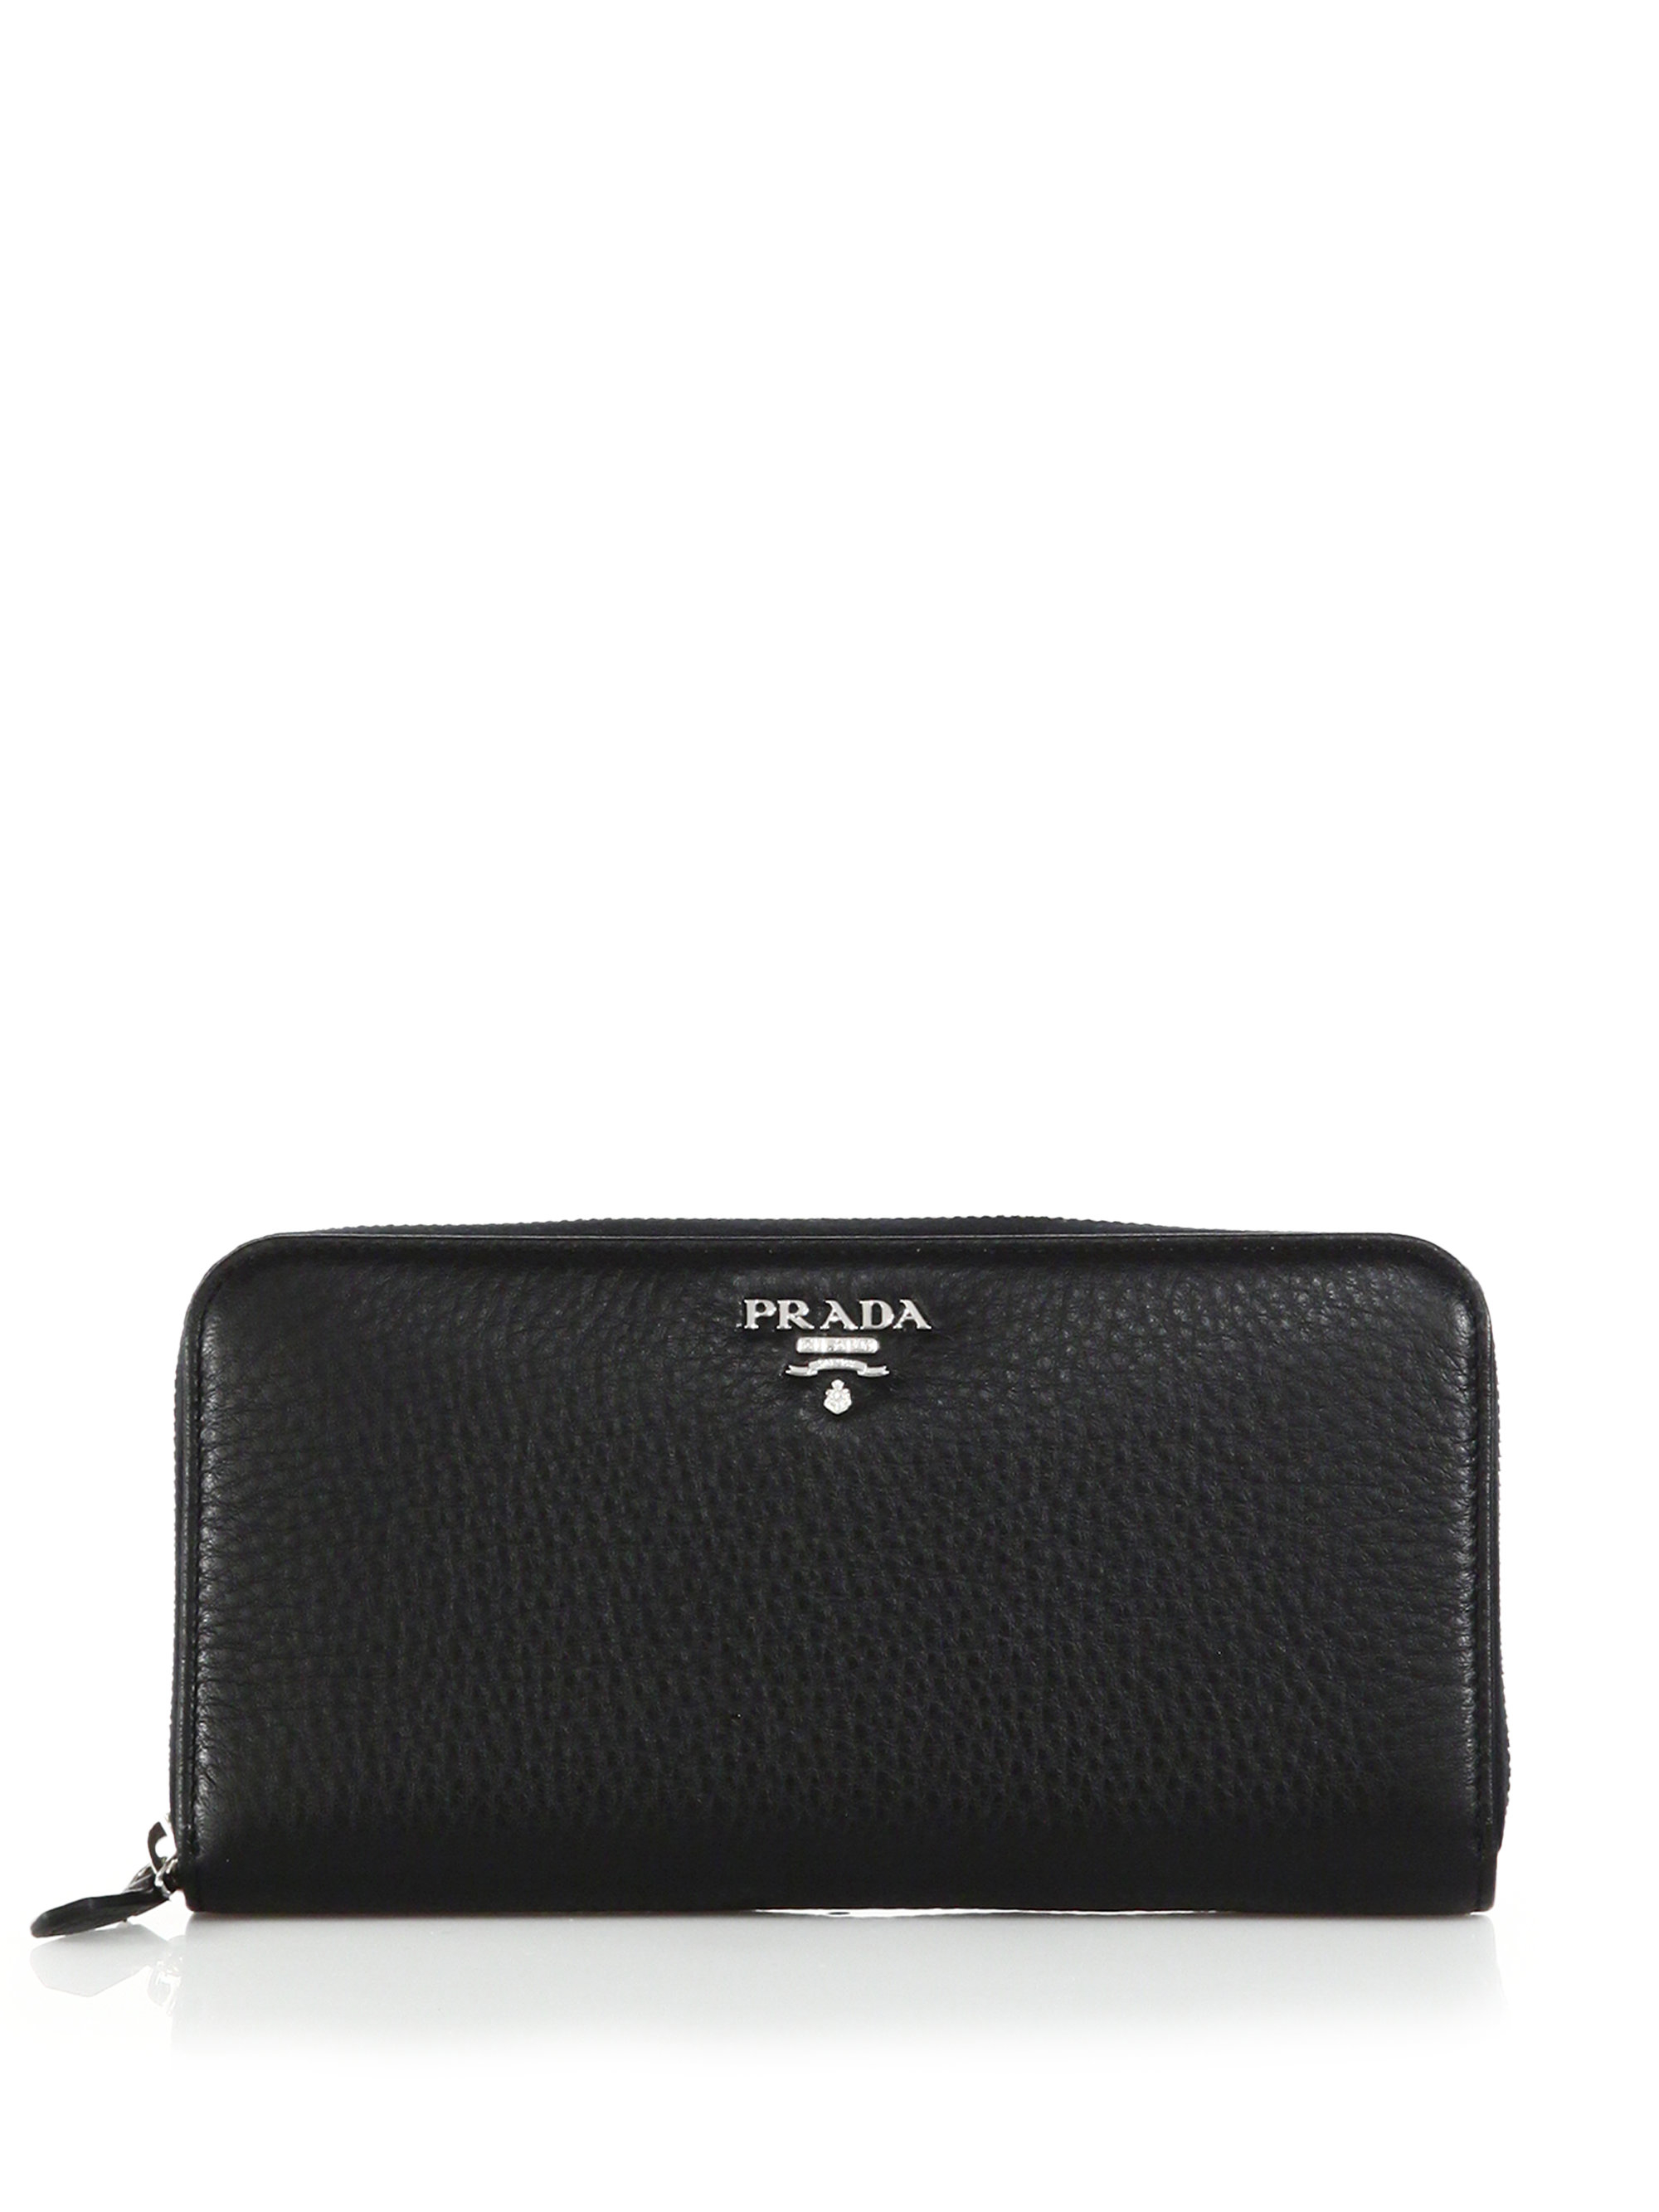 Prada Daino Leather Zip Continental Wallet in Black | Lyst  